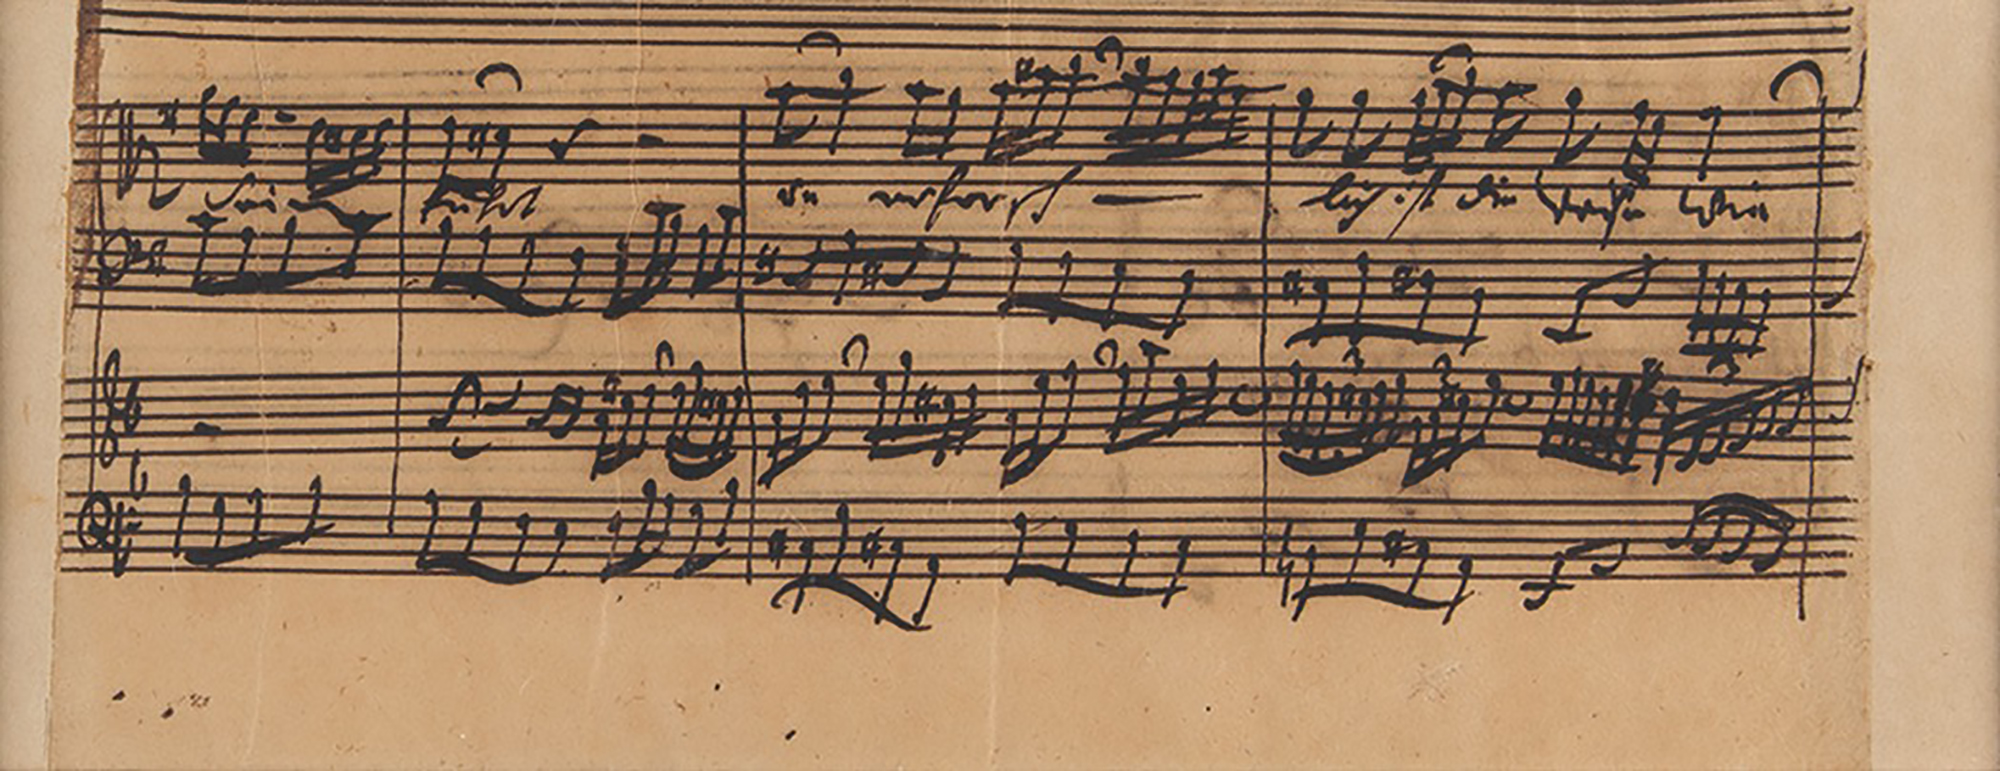 Lot #521 Johann Sebastian Bach Autograph Musical Manuscript - Image 6